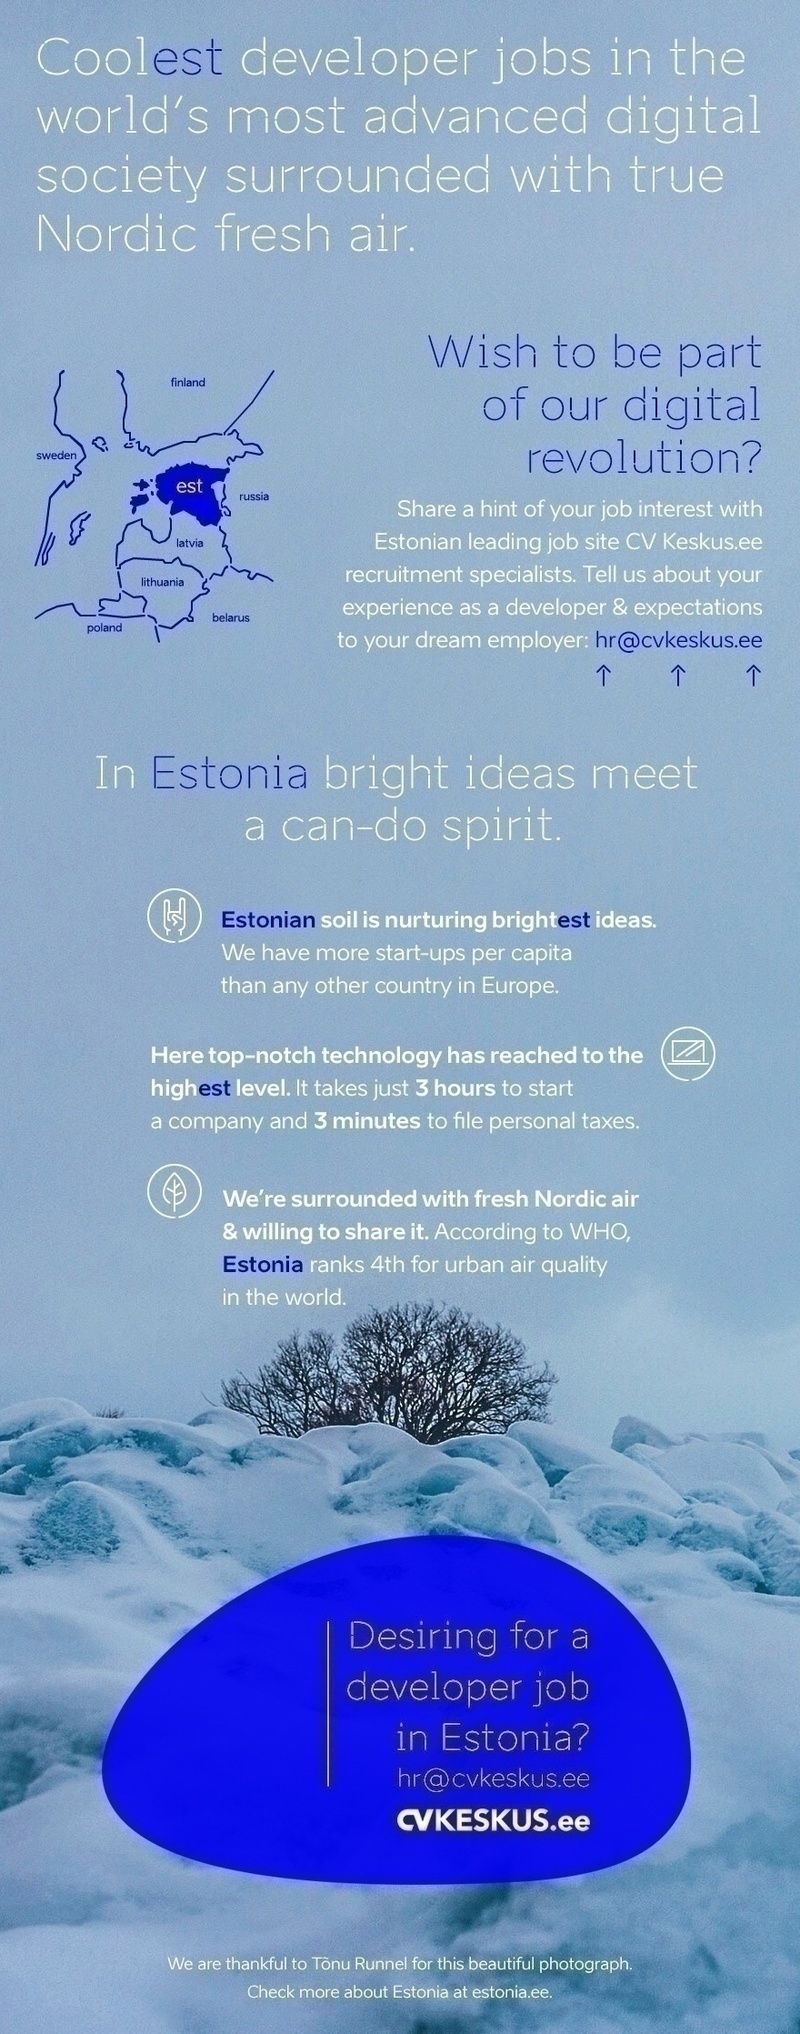 CV Keskus Developer, welcome to Estonia!